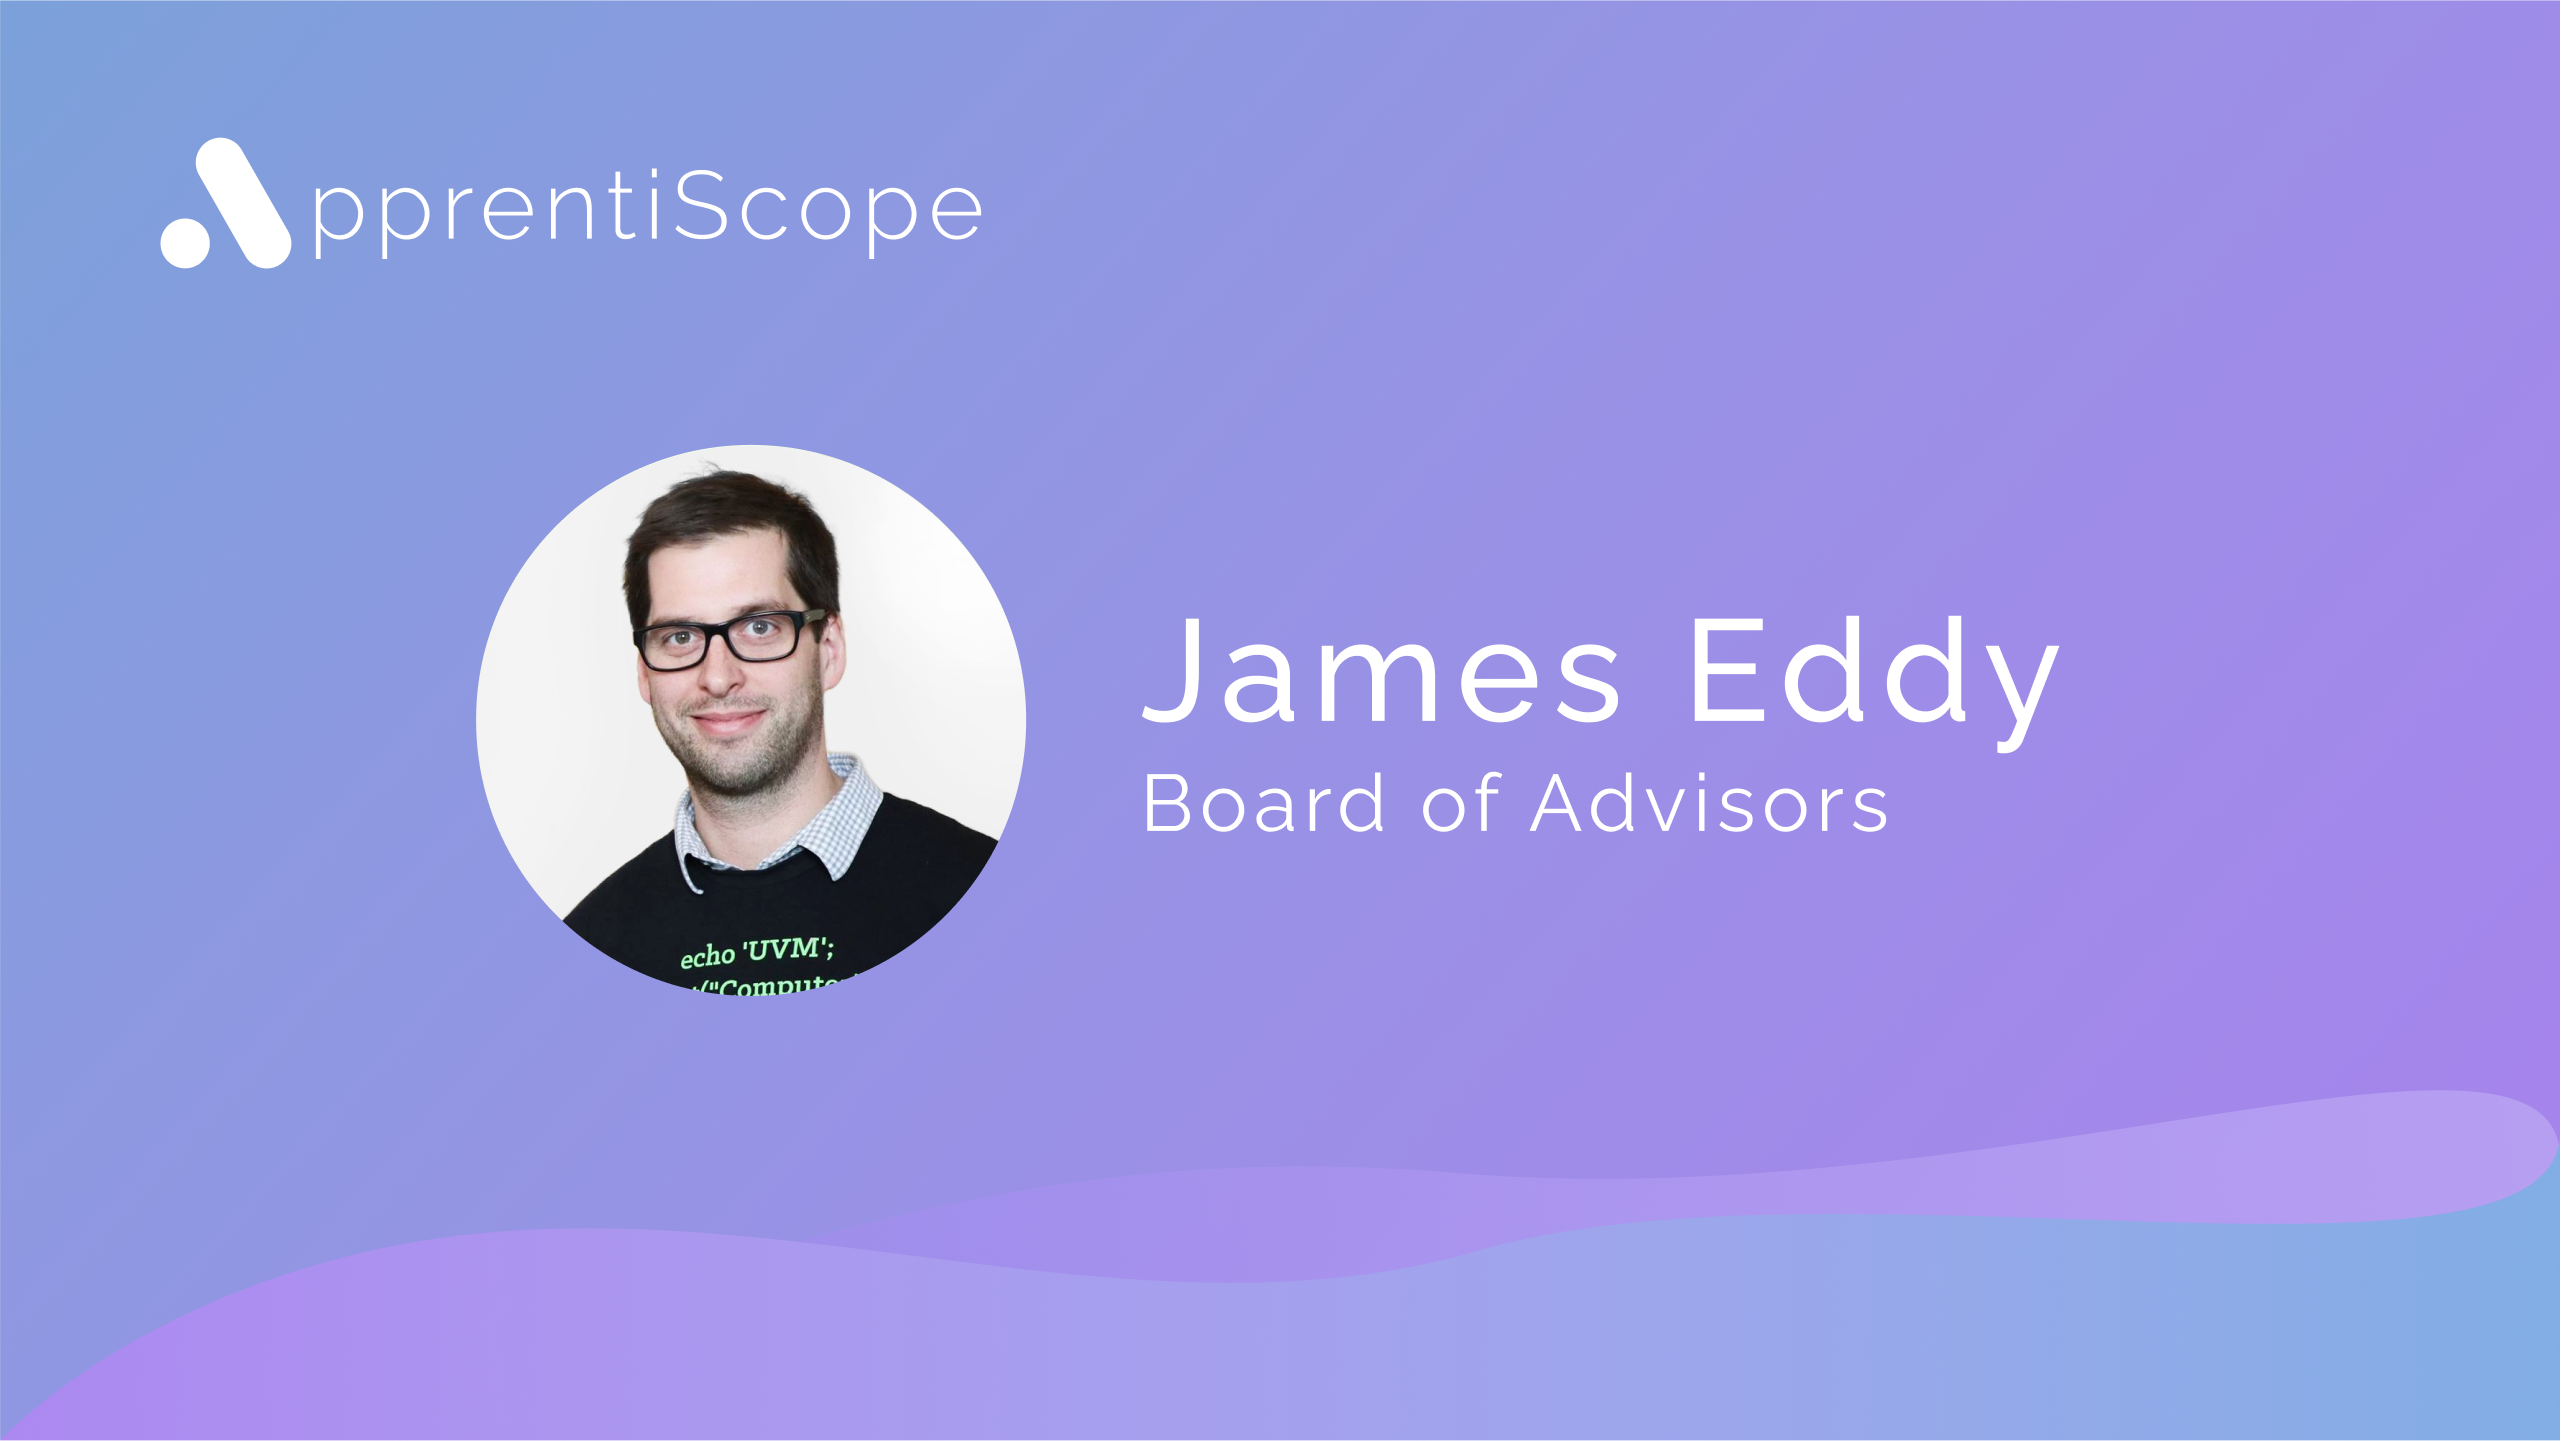 James Eddy joins the ApprentiScope Board of Advisors